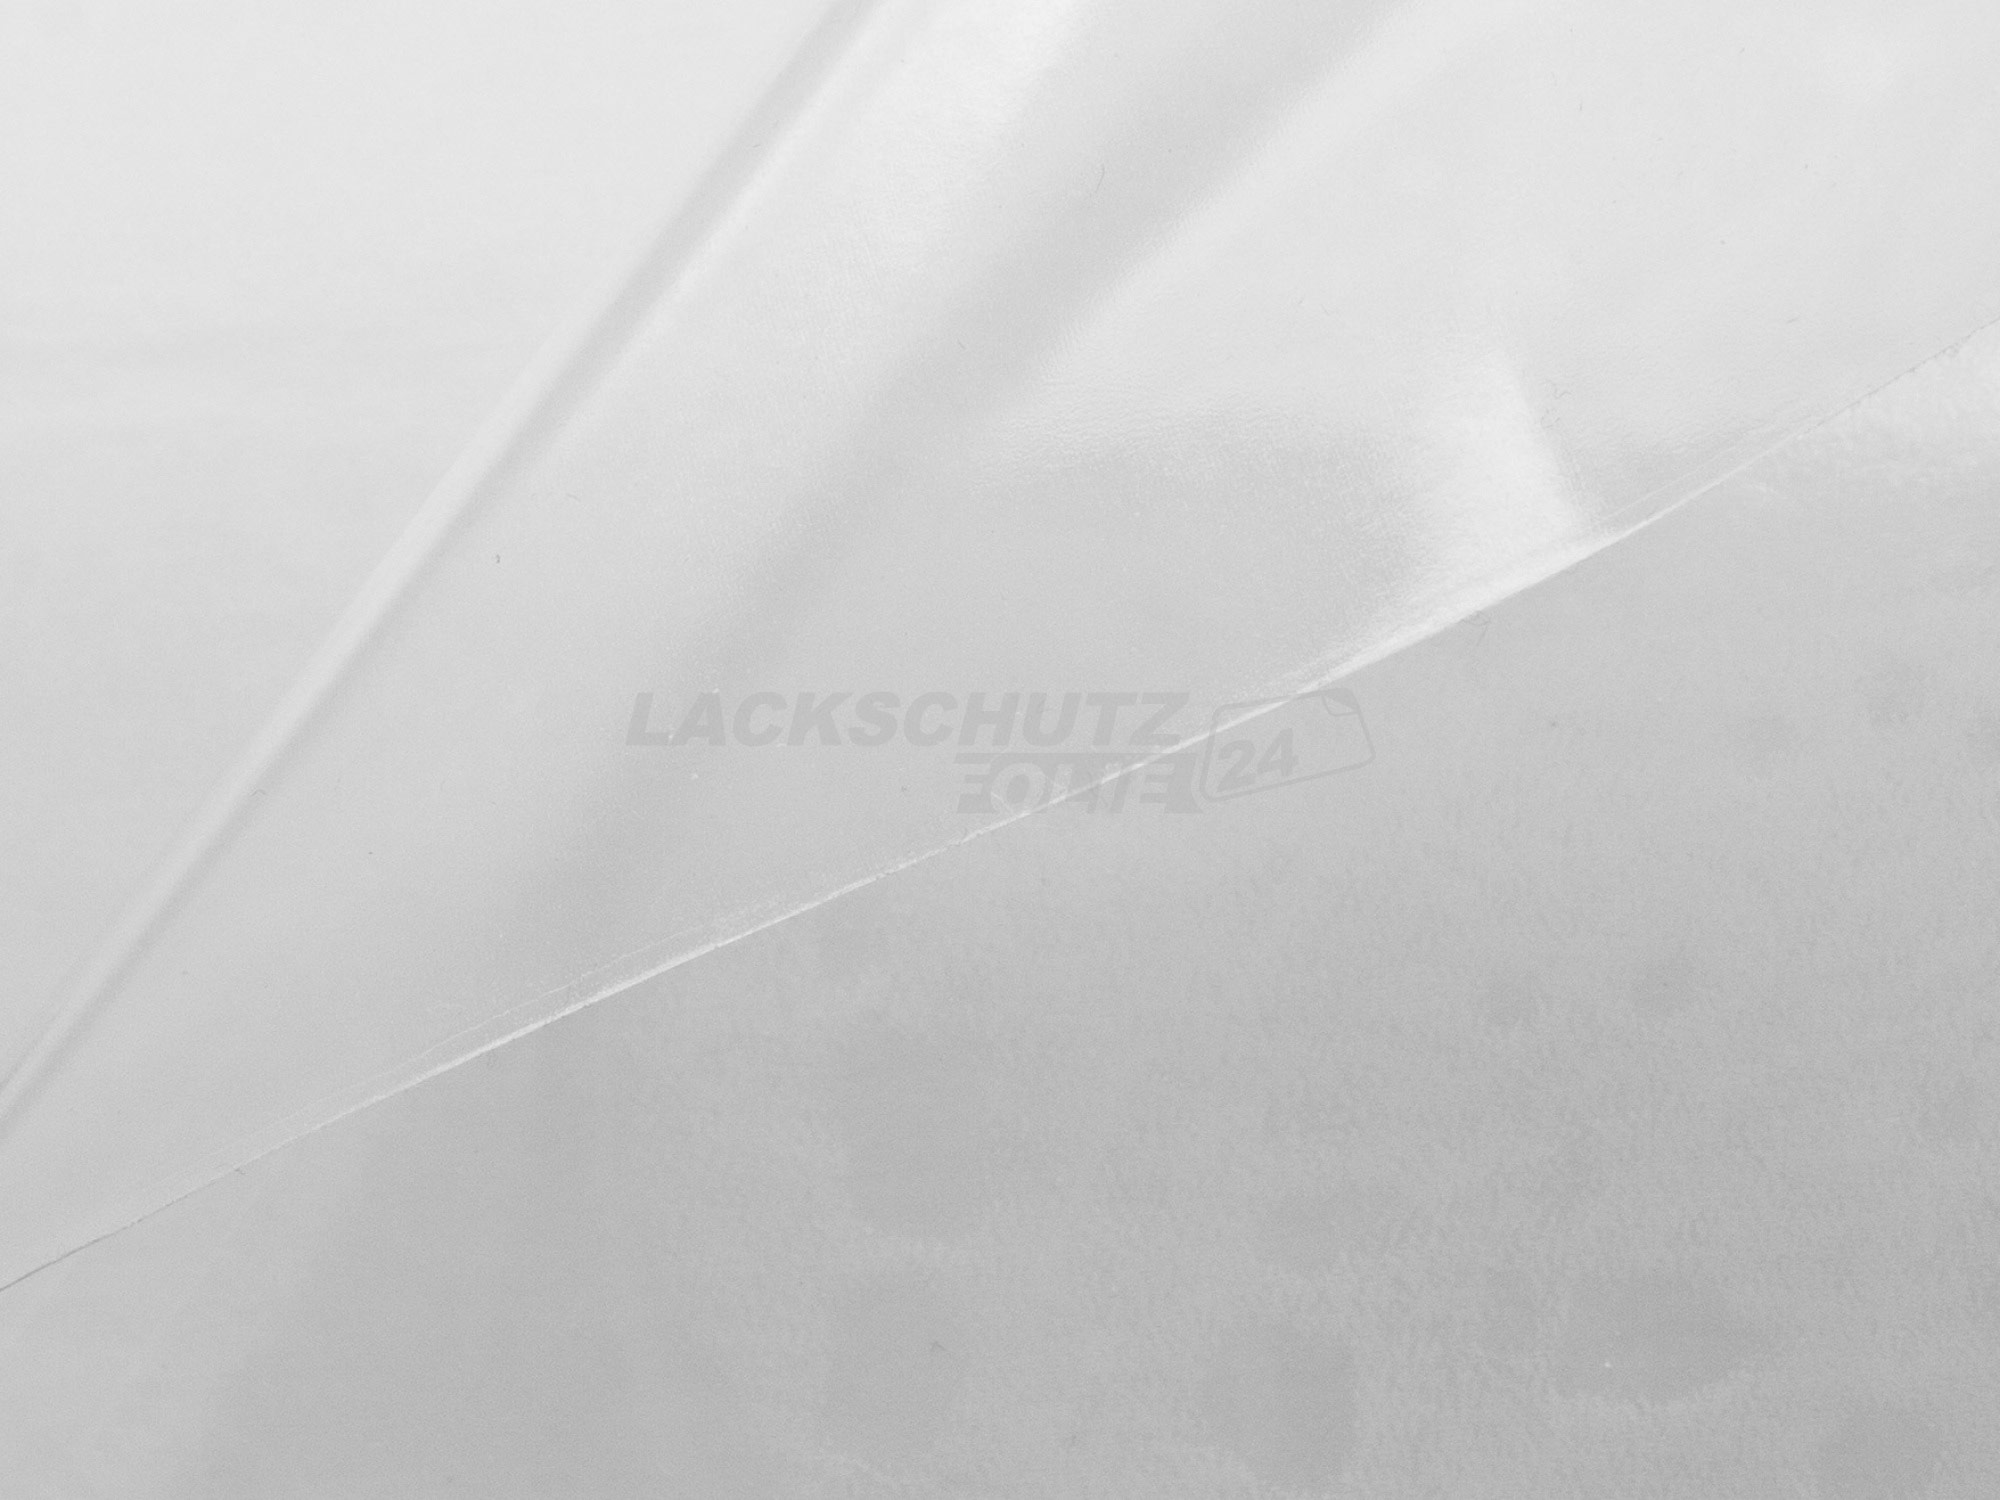 Ladekantenschutzfolie - Transparent Glatt Hochglänzend 150 µm stark für BMW 5er Limousine Typ E60, BJ 2004-2010